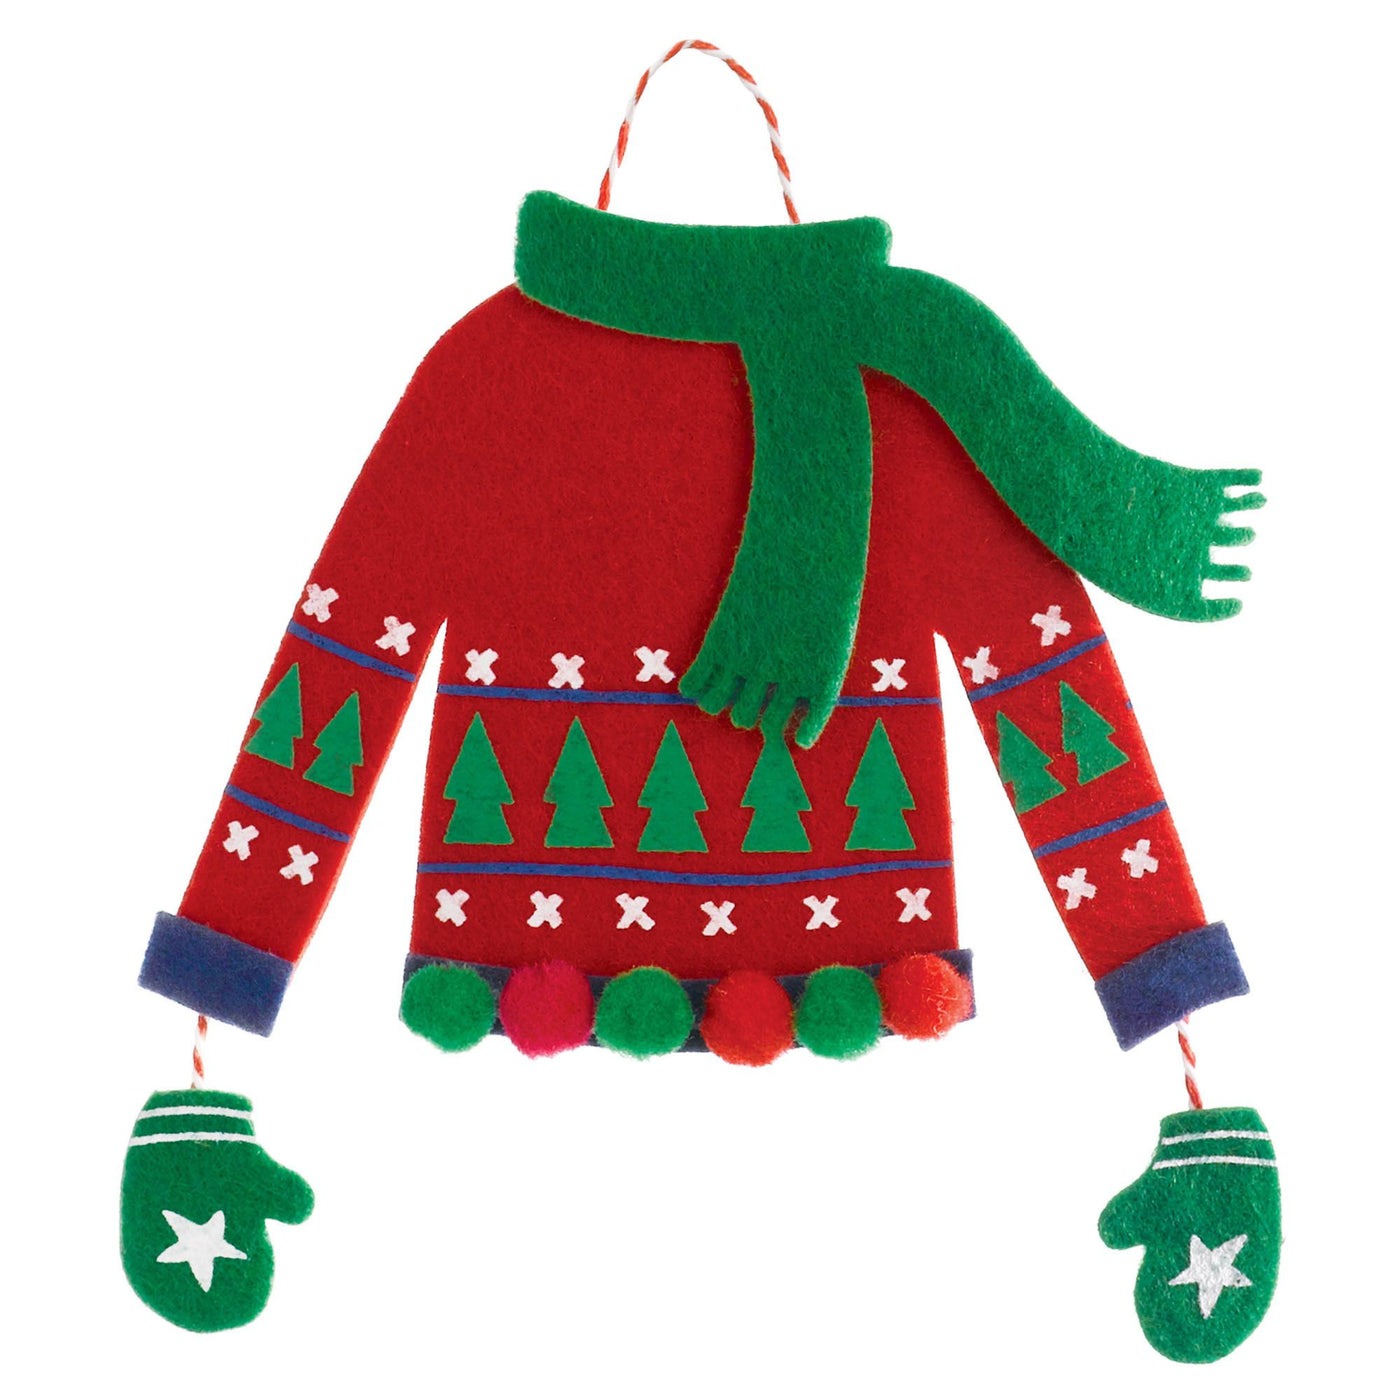 Felt Christmas Tree Ornament - Sweater